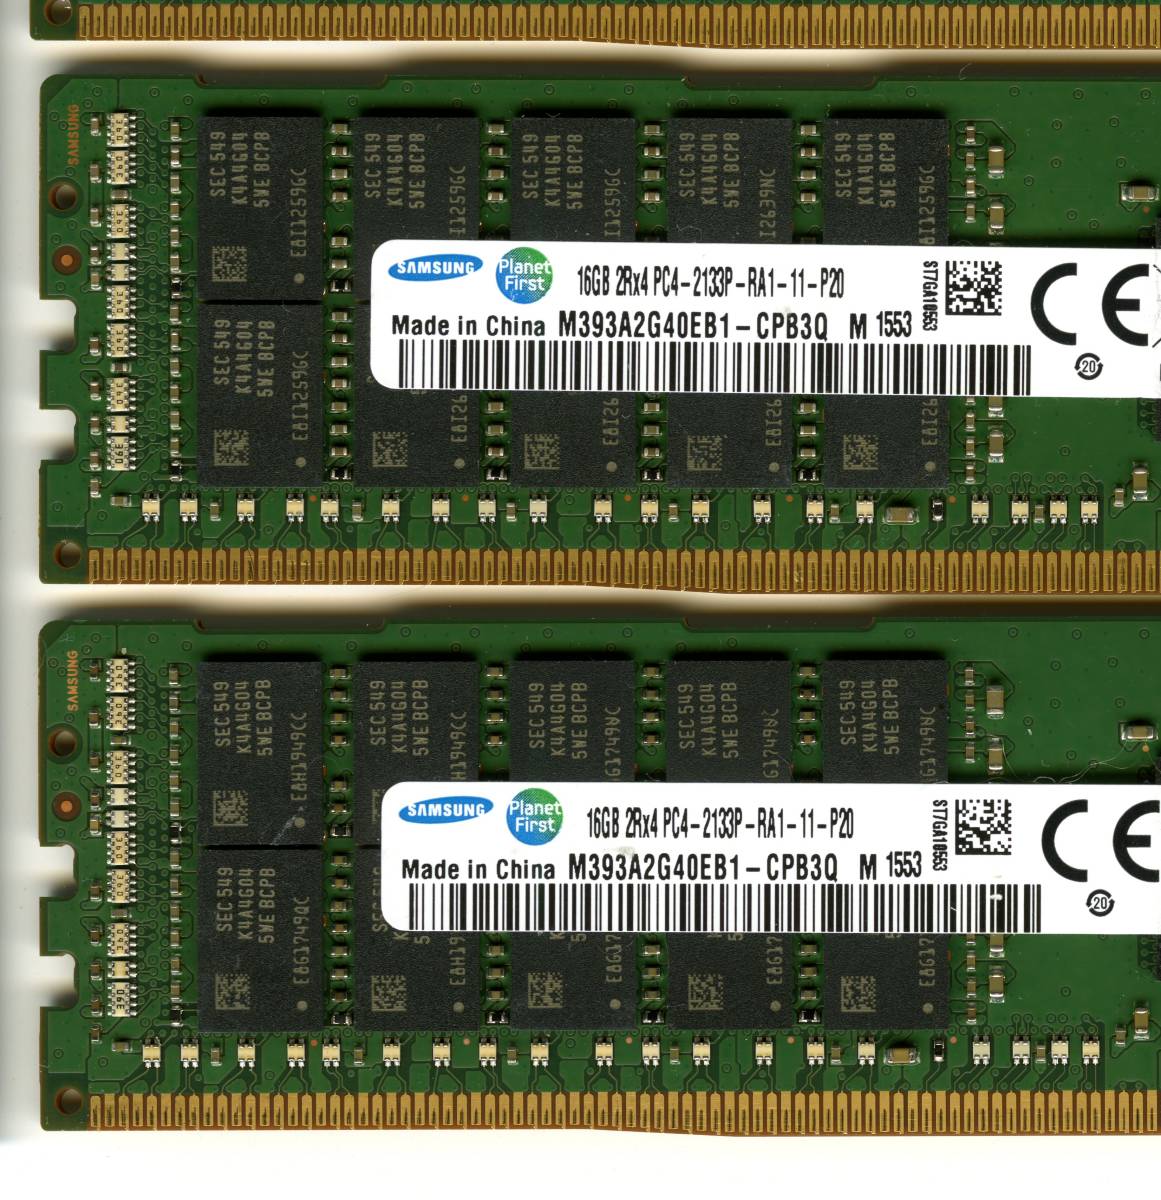 HP純正 Samsung、DDR4-2133、ECC Registered、16GB×4枚セットで64GB